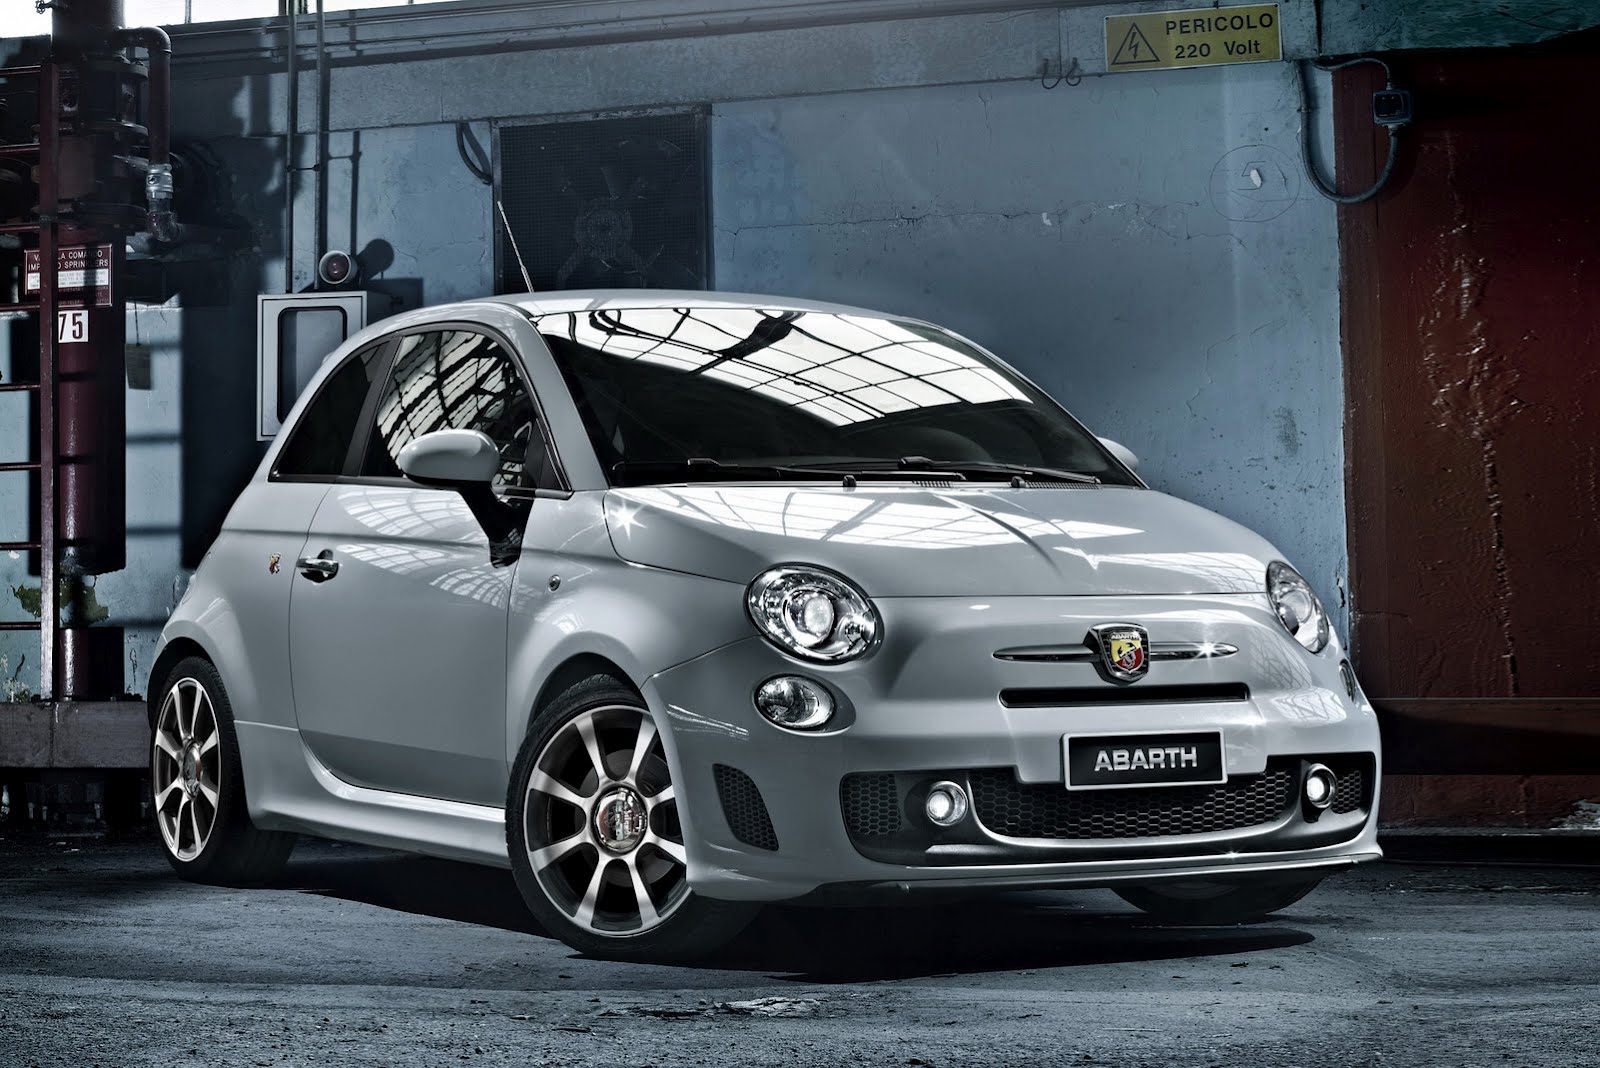 Fiat Abarth 595 Competizione Price, Review, Specifications